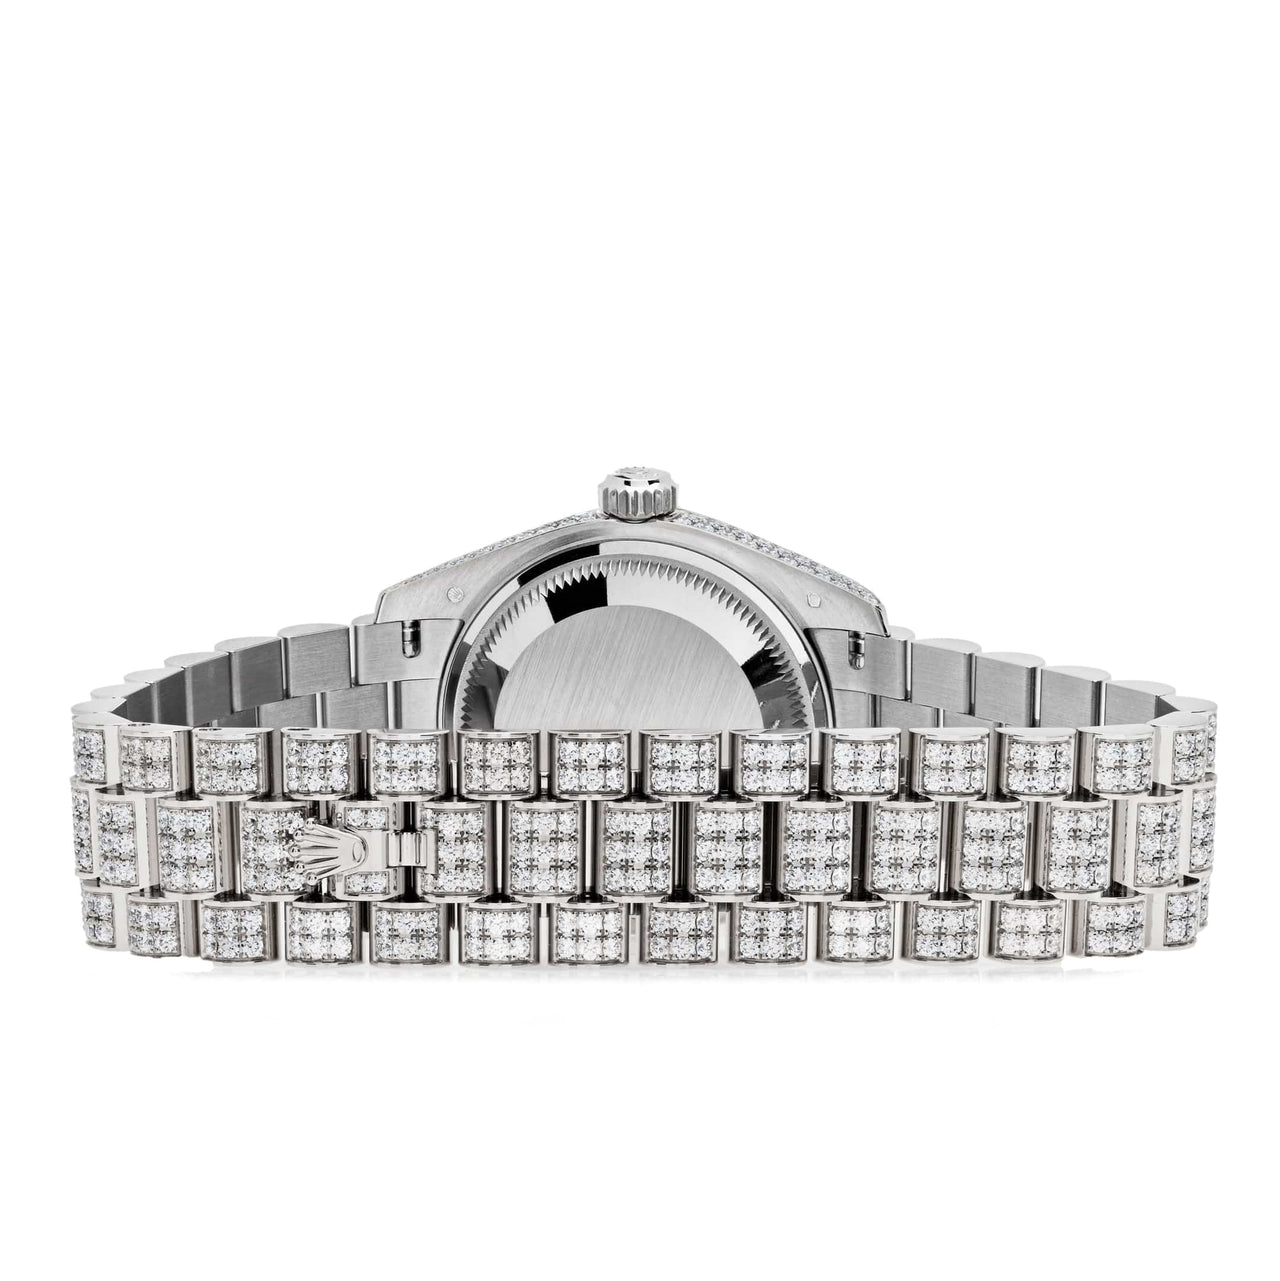 Rolex Ladies Datejust White Gold Pave Set Diamonds 279459RBR Wrist Aficionado